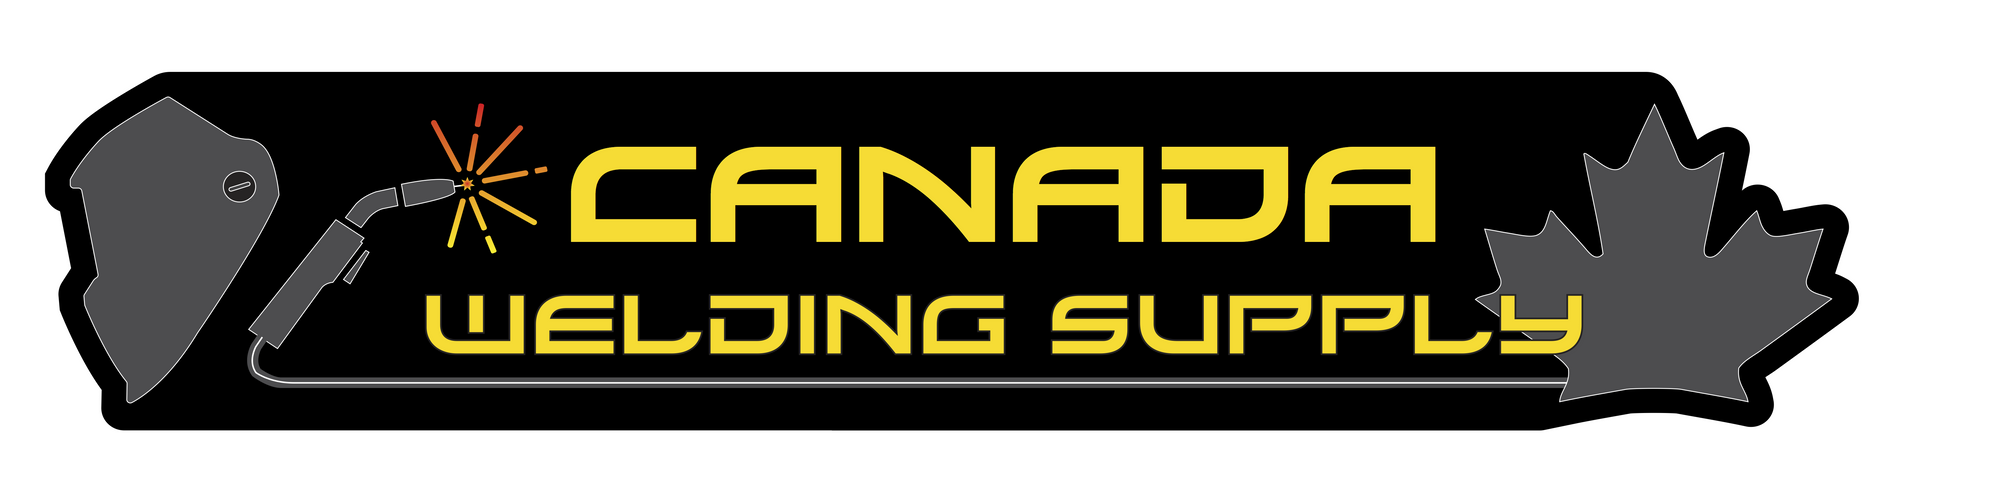 canada welding supply logo